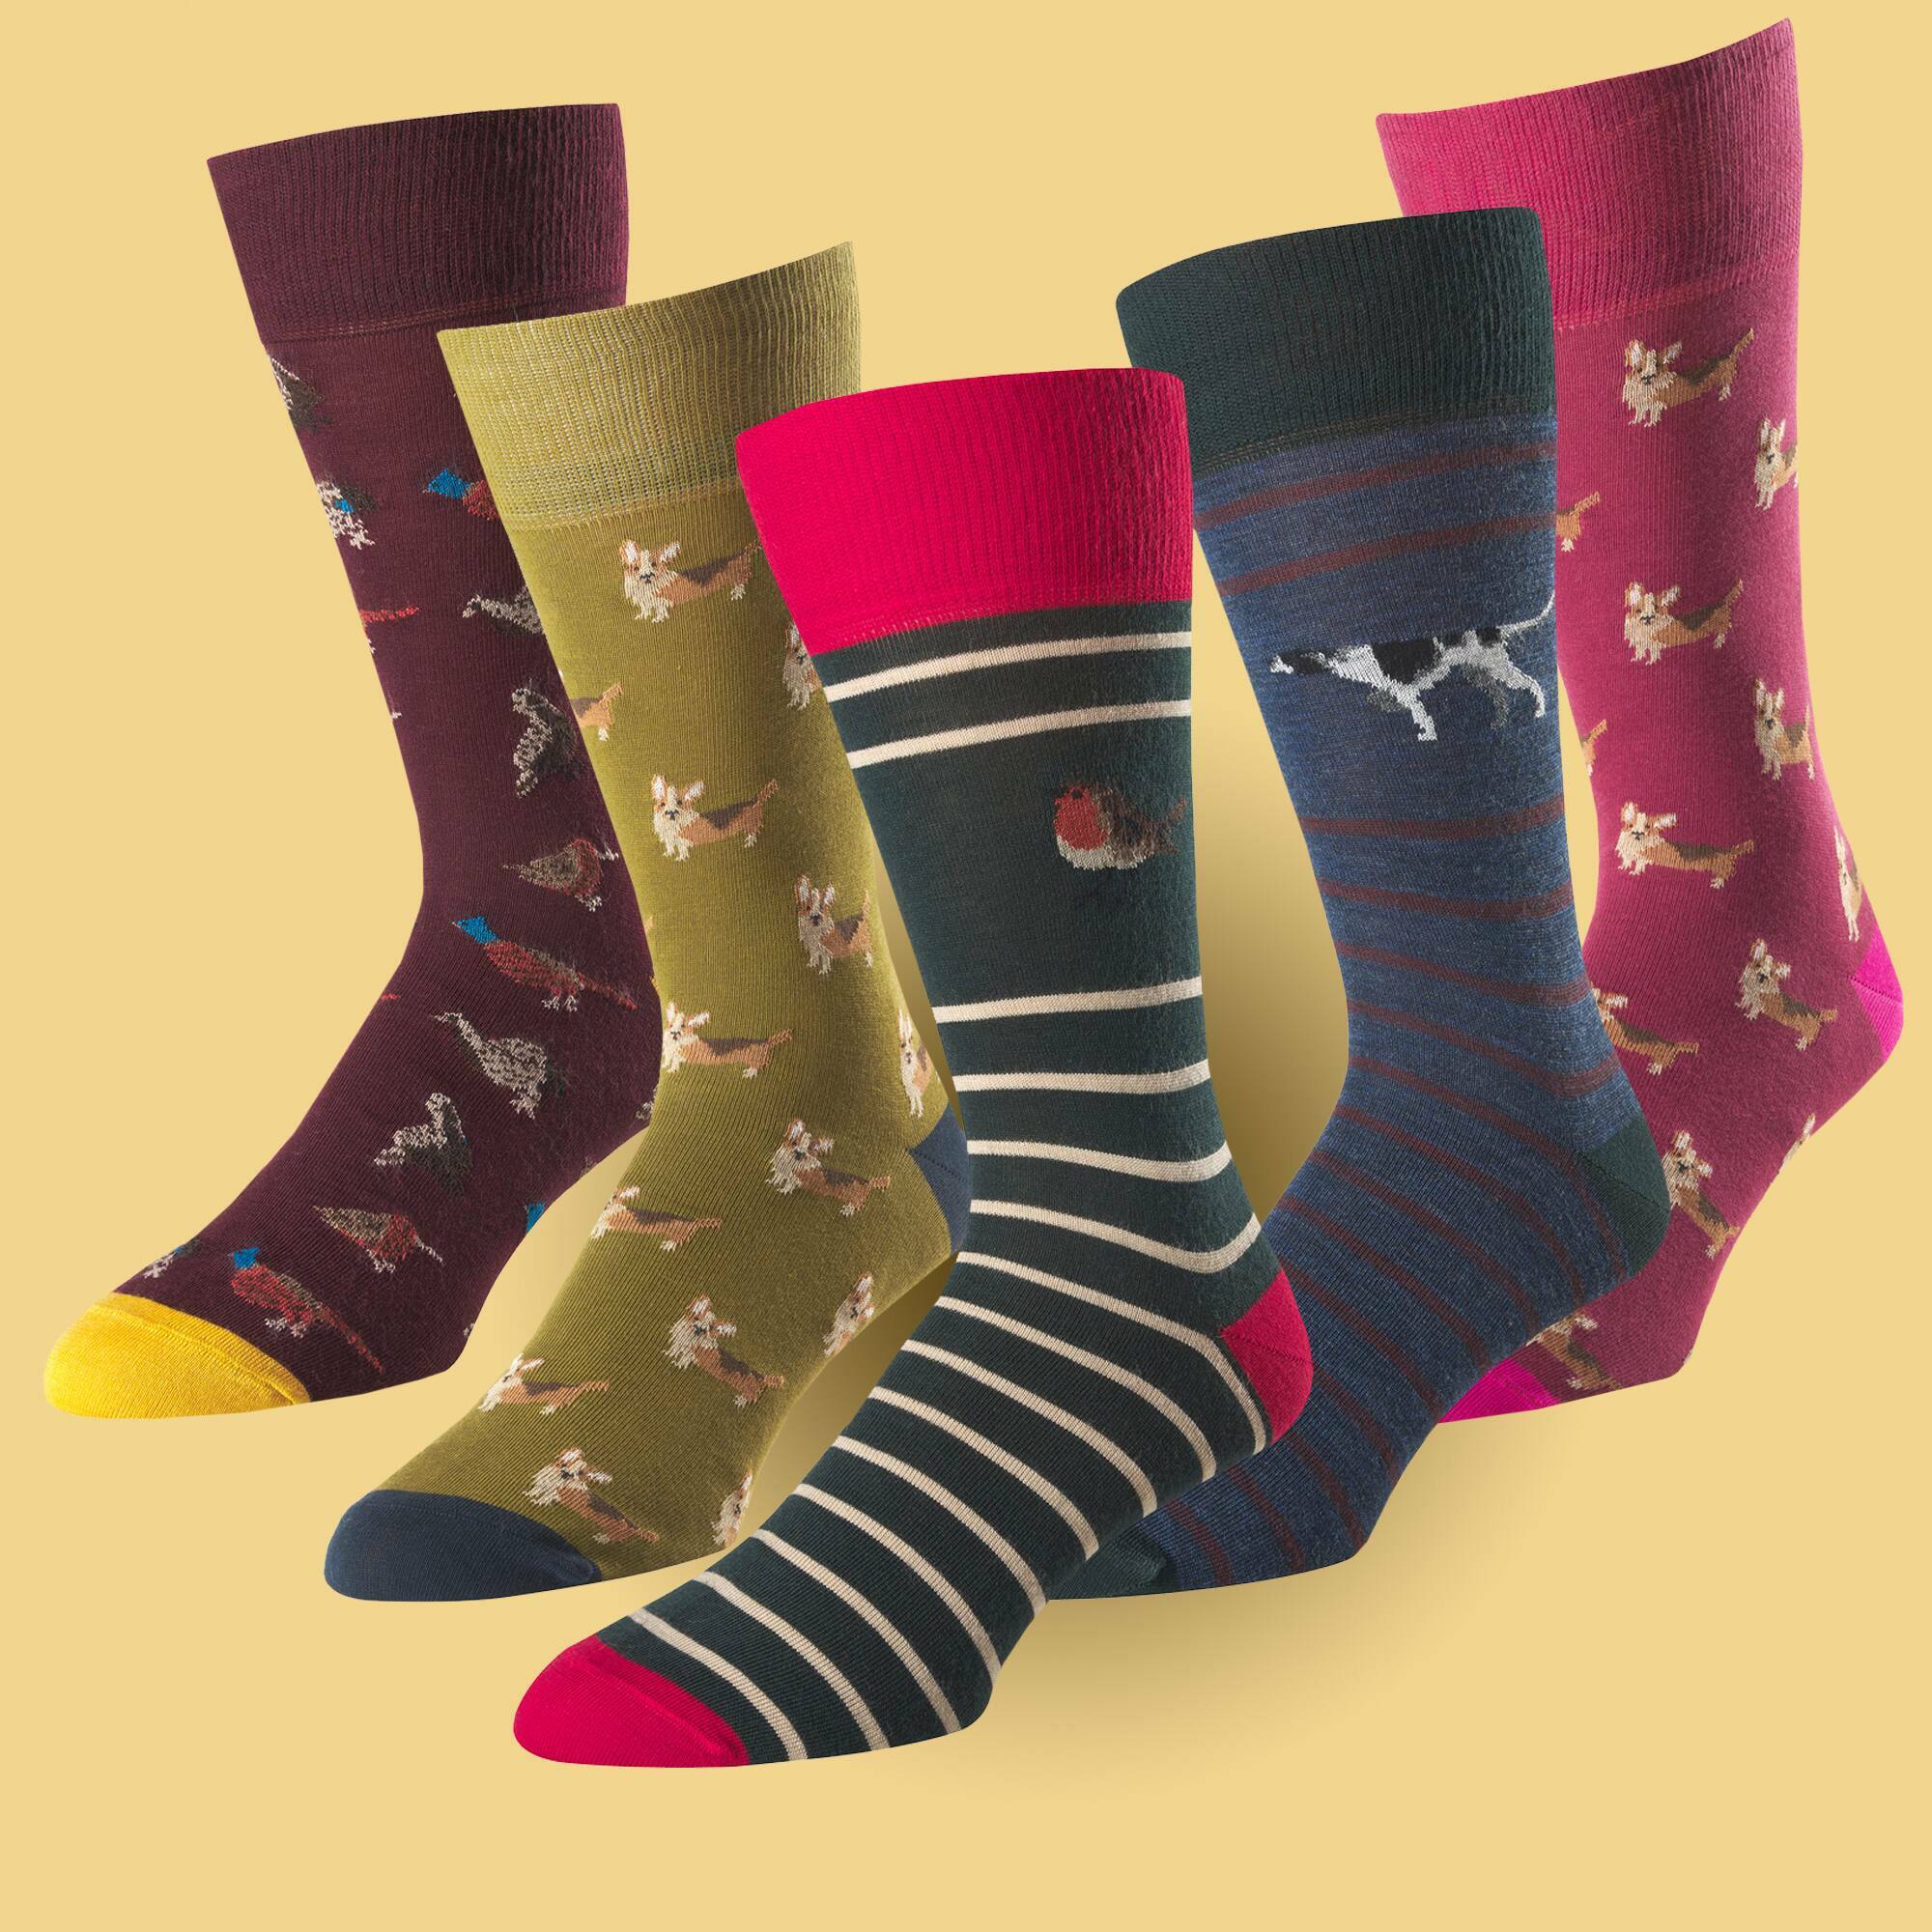 Corgi Socks: Where Heritage Meets Craftsmanship